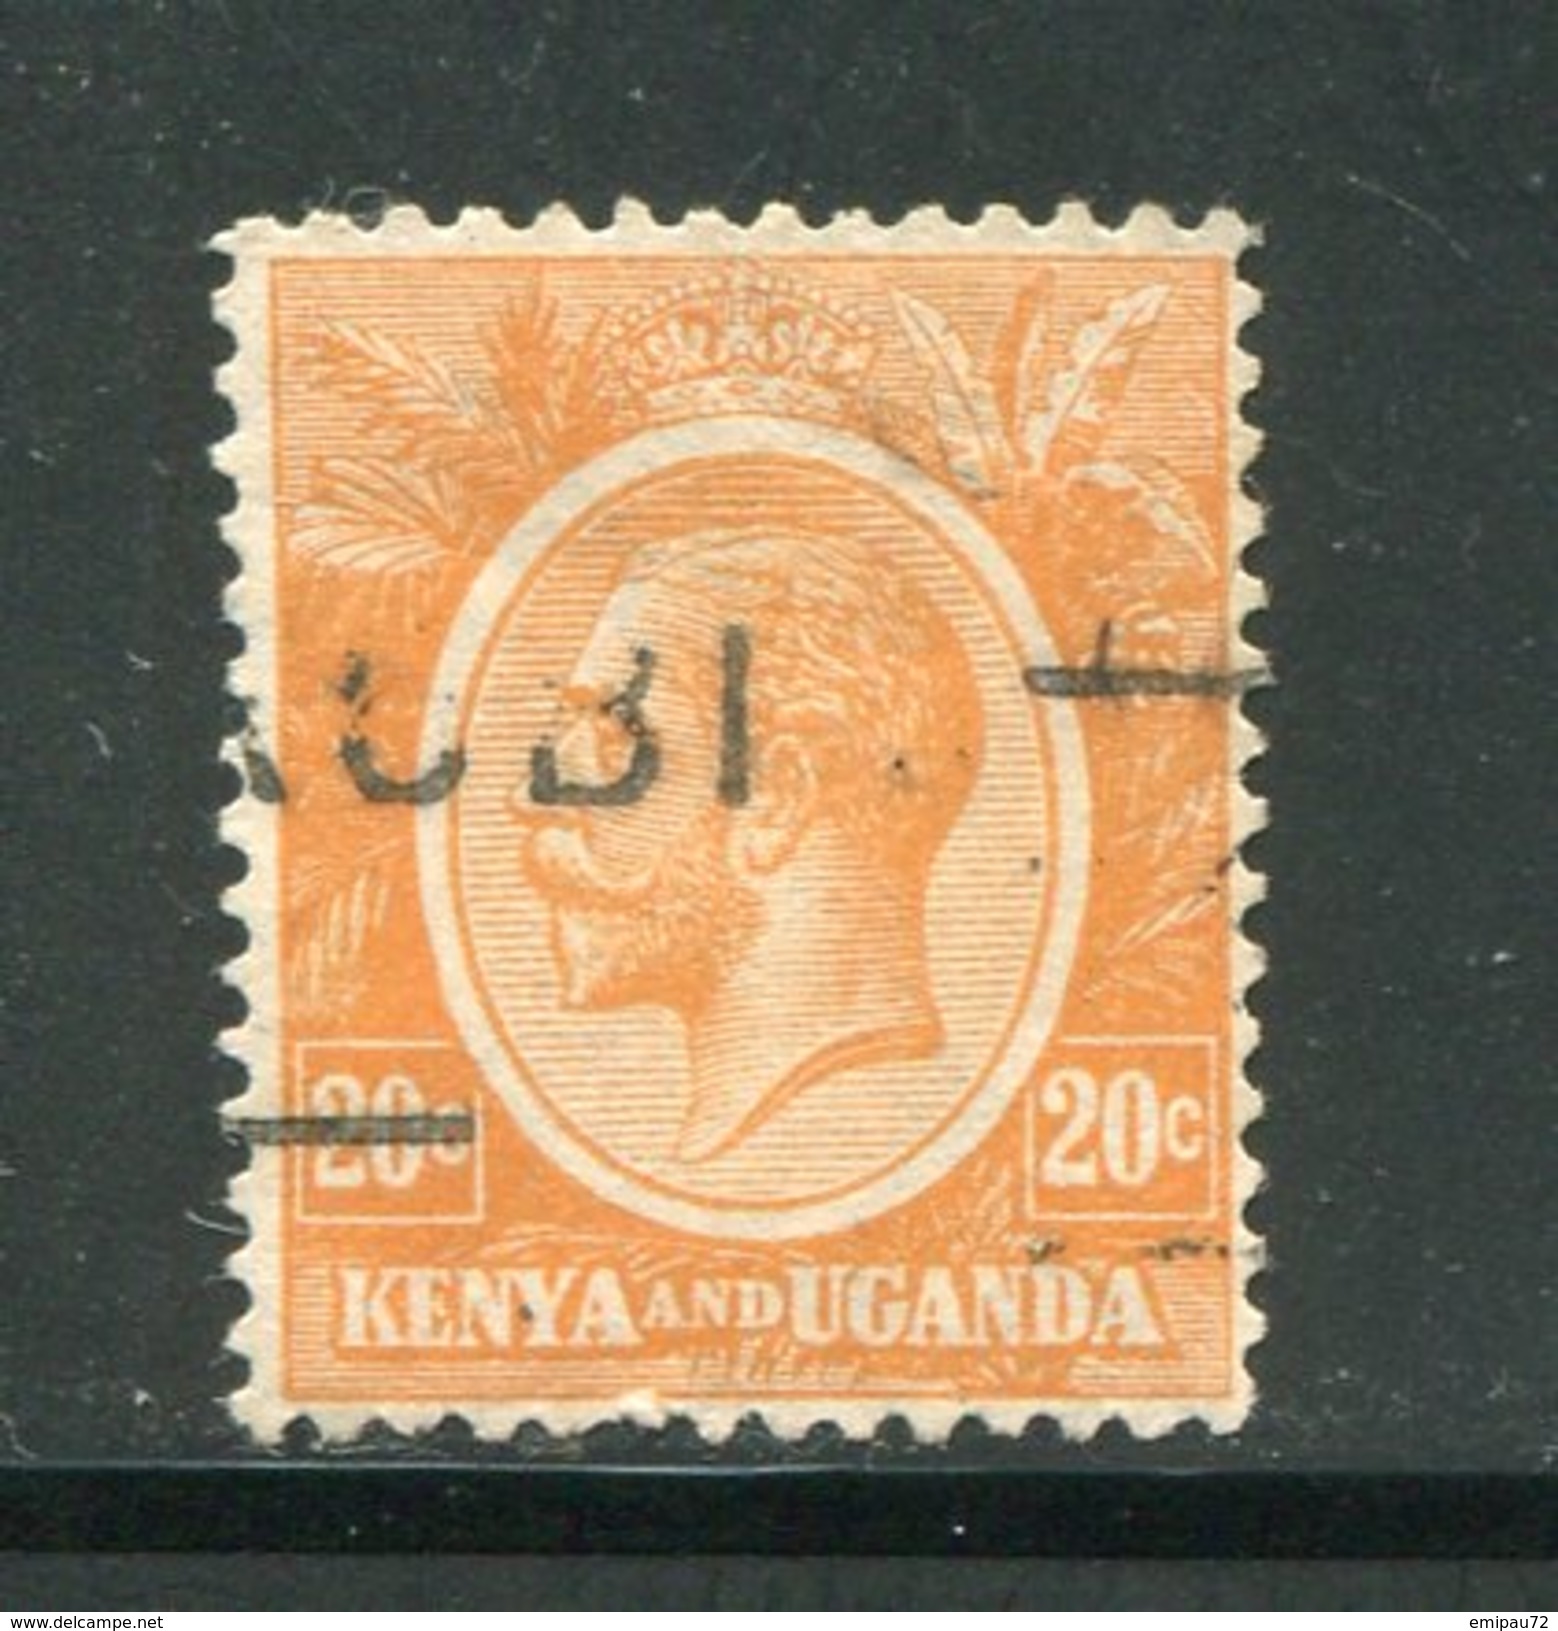 KENYA Et OUGANDA- Y&T N°6- Oblitéré - Kenya & Uganda